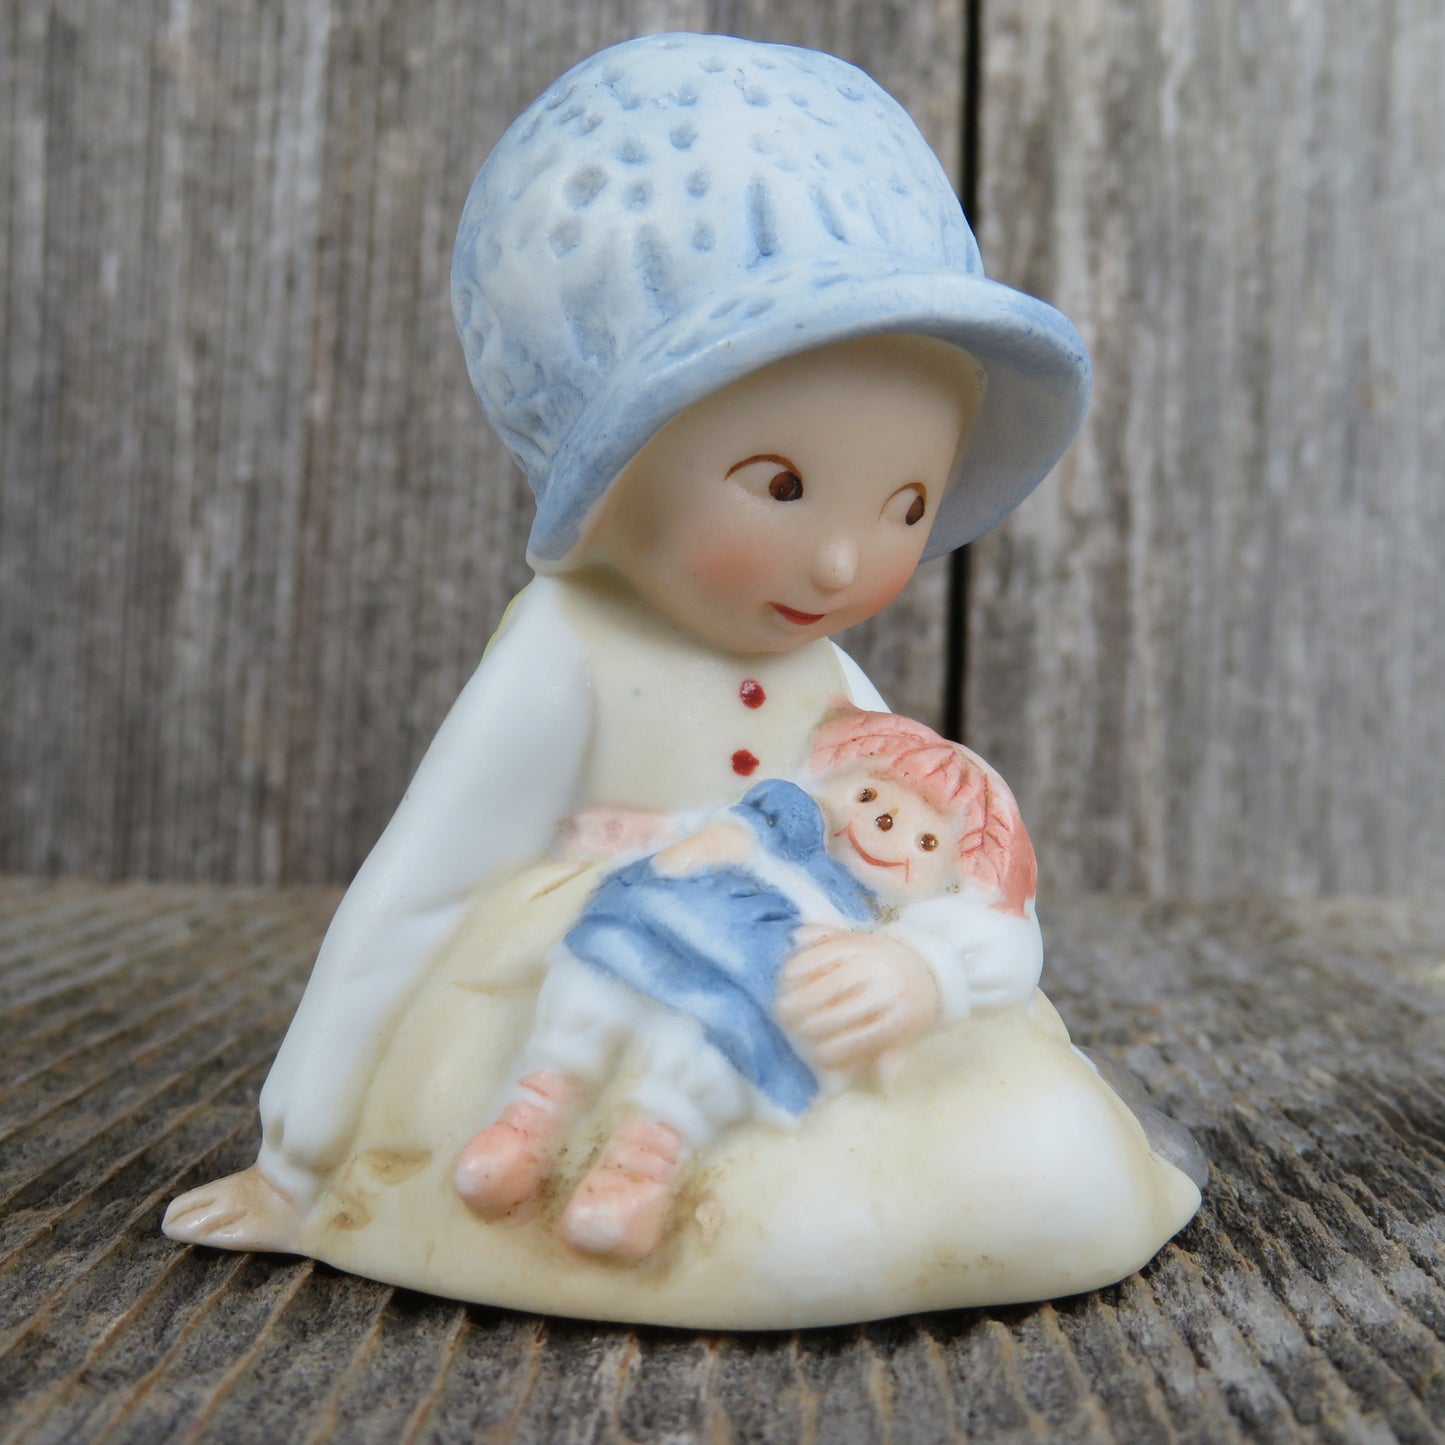 Vintage Holly Hobbie with Doll Figurine Sitting on the Floor Blue Bonnet Beige Apron Bisque Ceramic